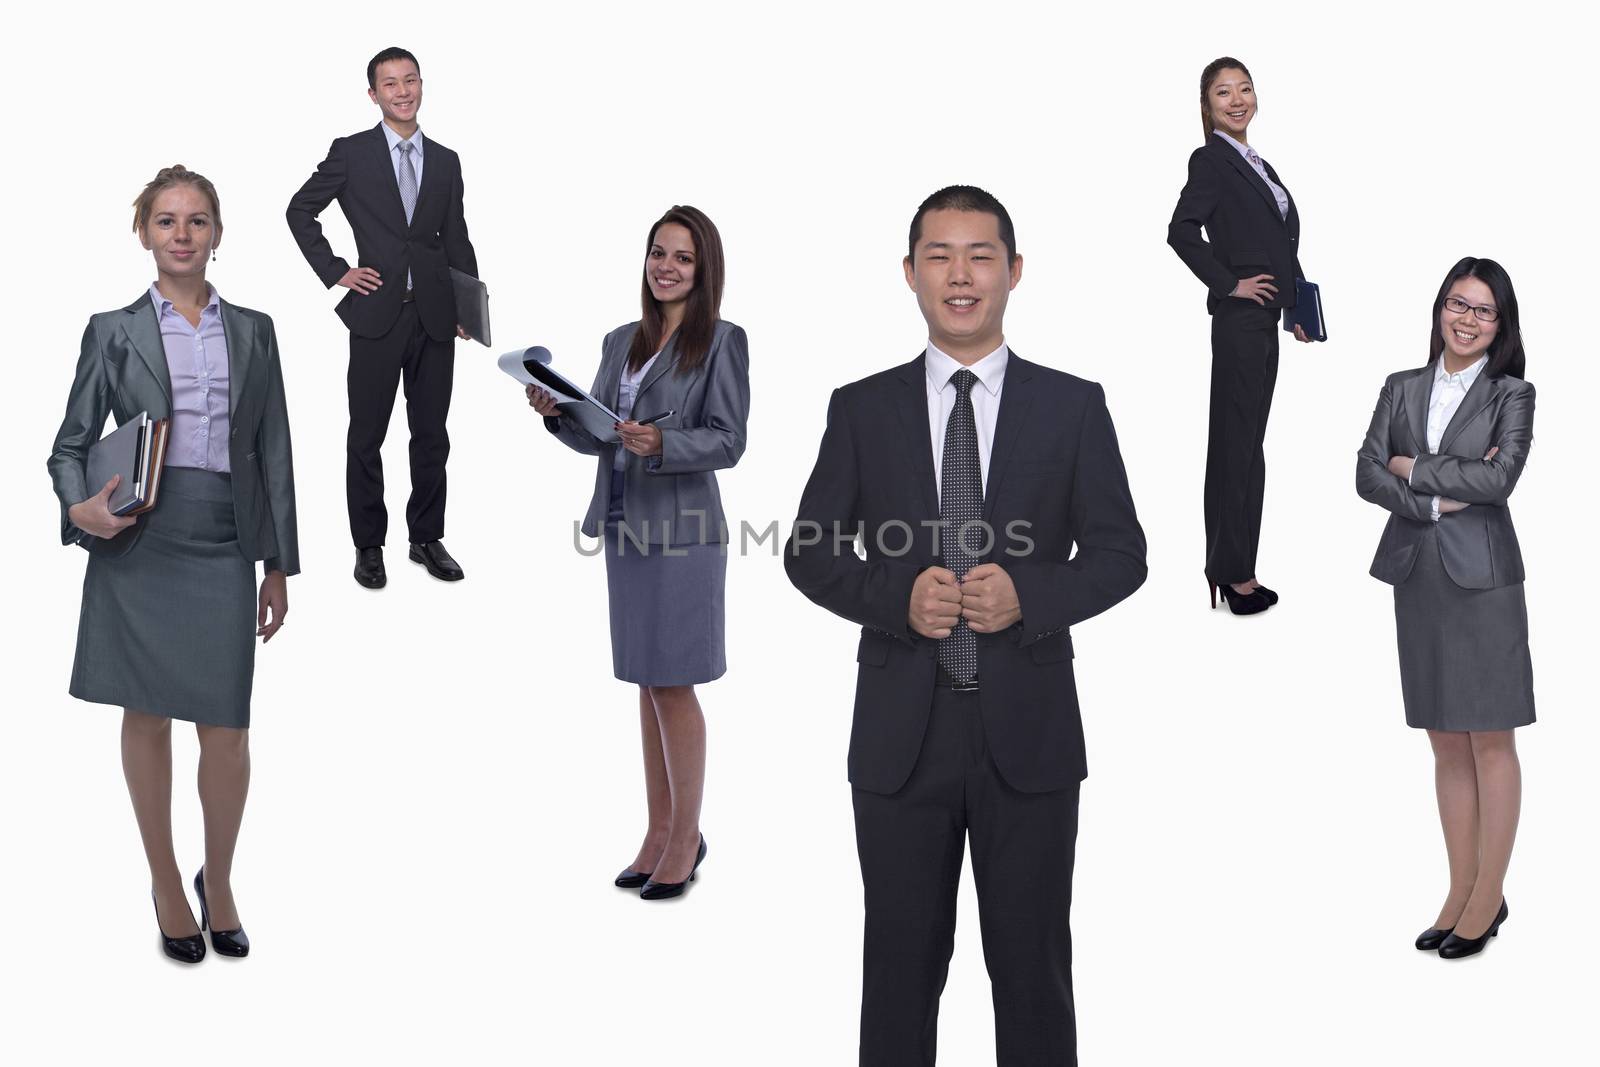 Medium group of smiling business people, portrait, full length, studio shot